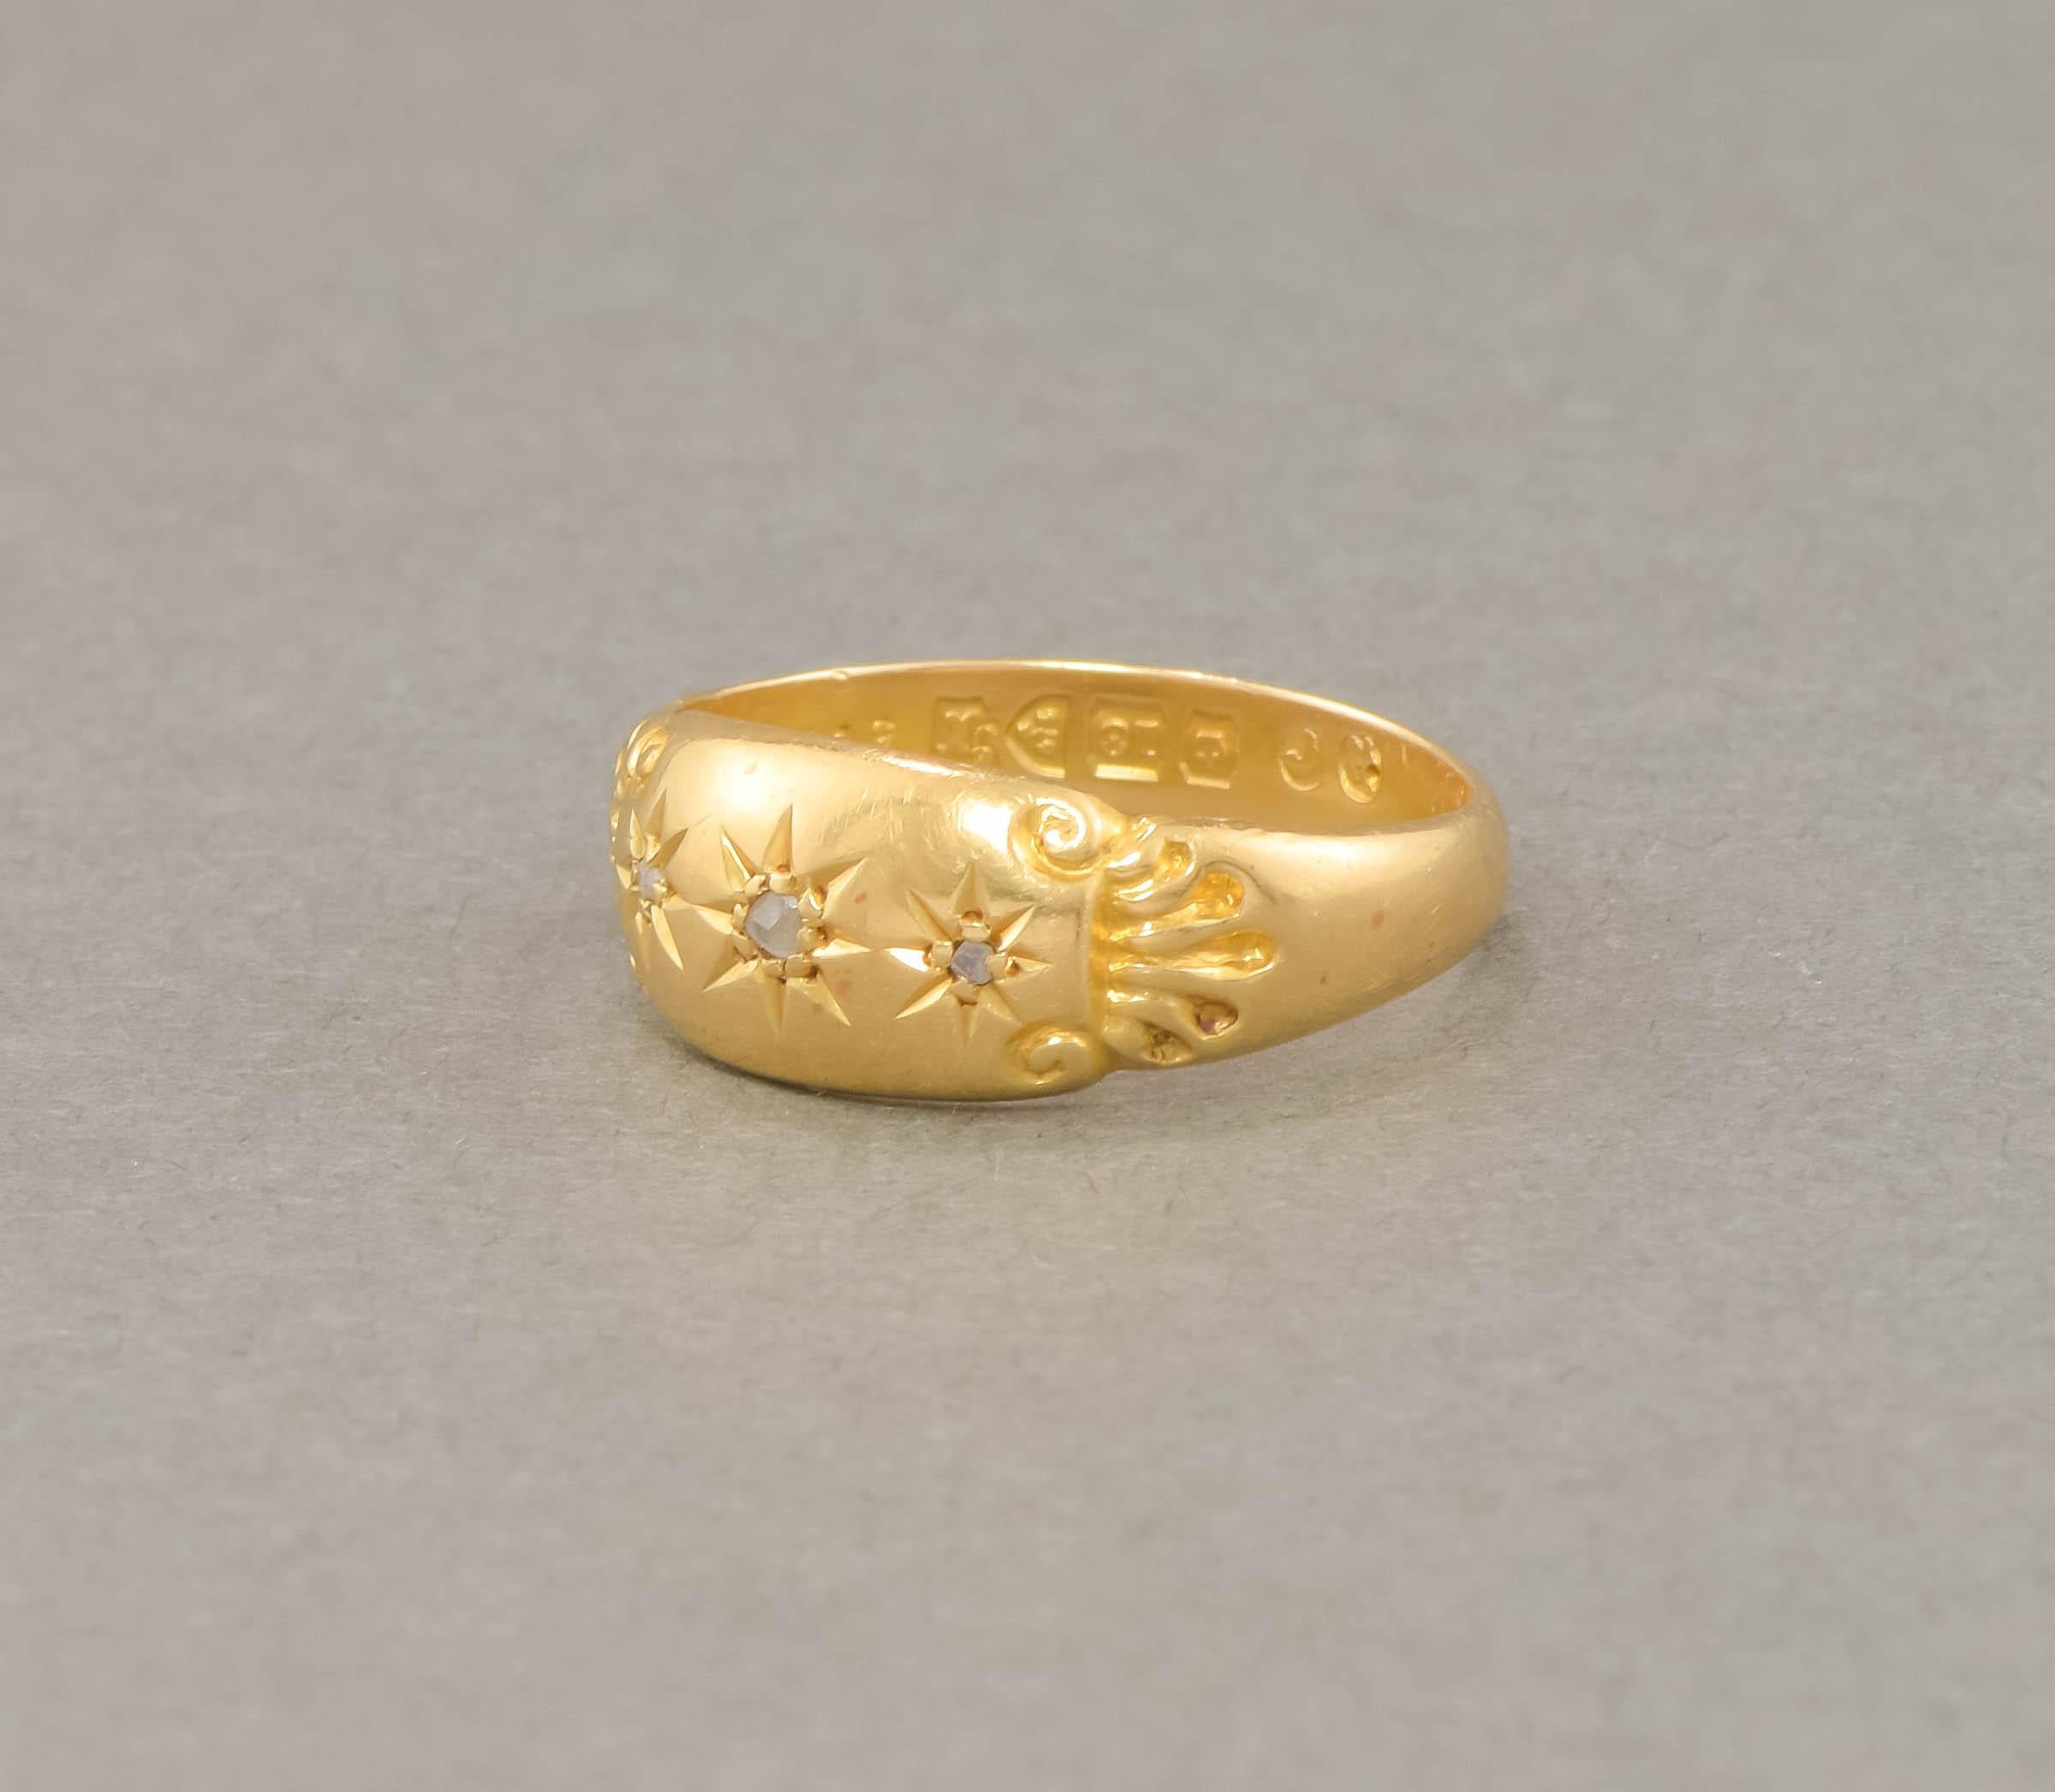 Edwardian 18K Gold Diamond Band Ring, Hallmarked Chester 1910 - 1911 2